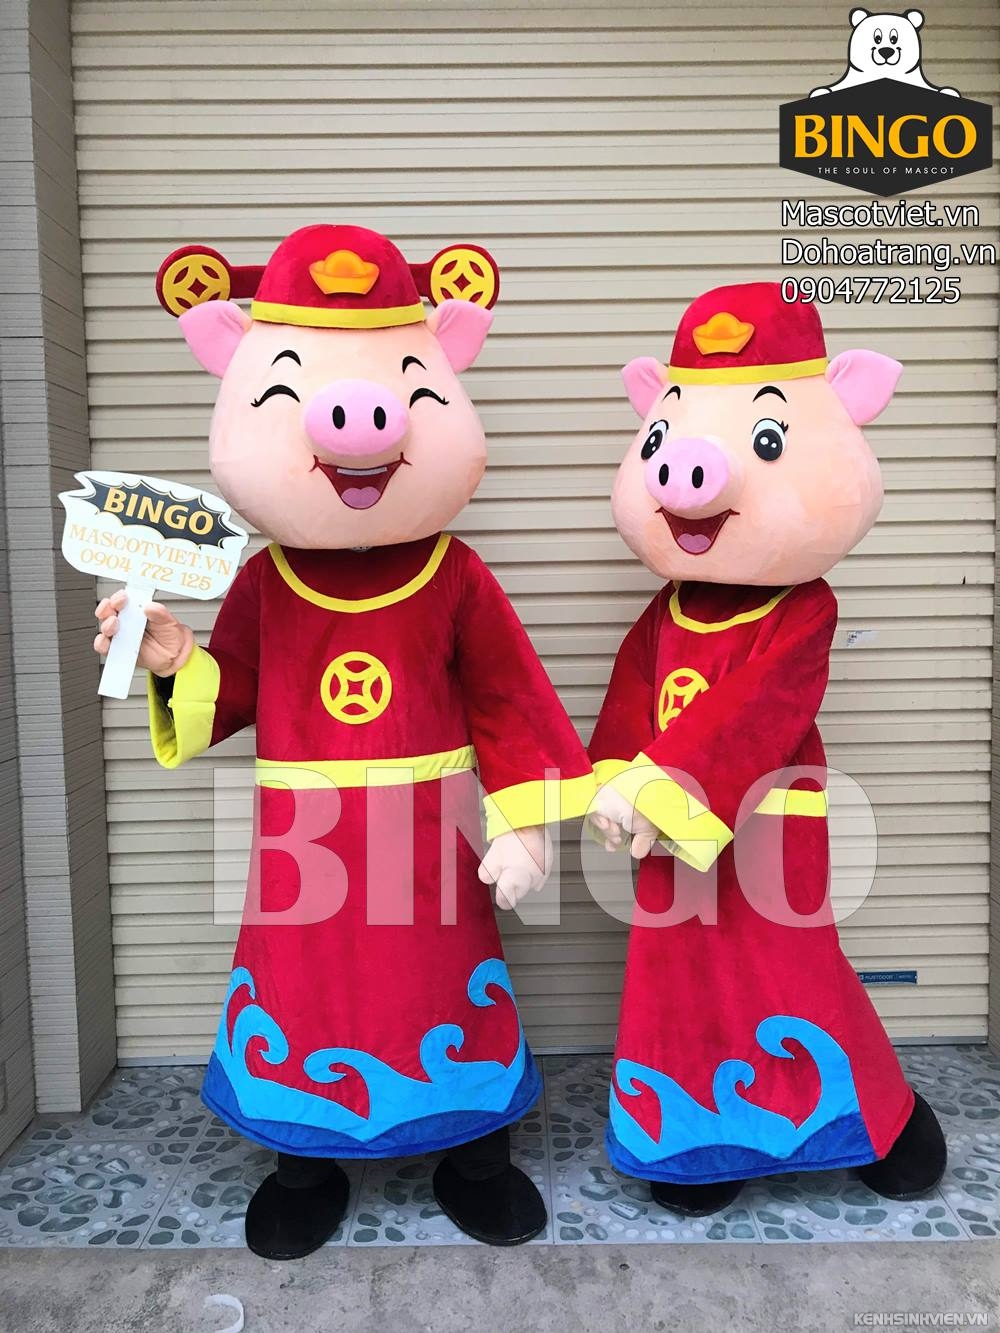 mascot-con-heo-than-tai-bingo-costumes-0904772125.jpg